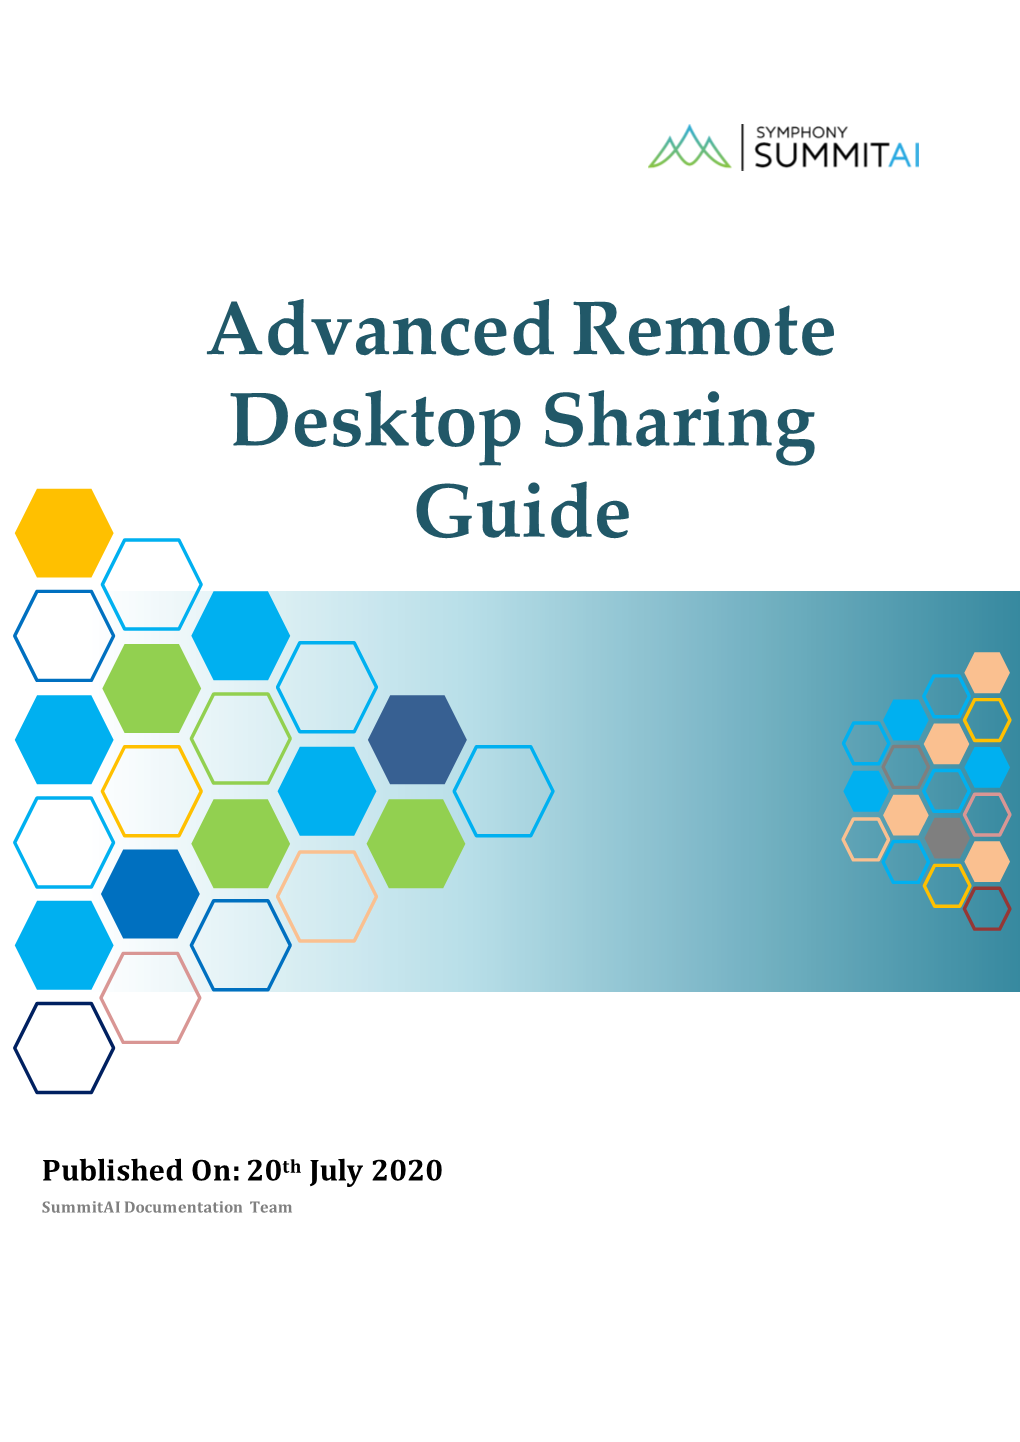 Advanced Remote Desktop Sharing Guide Version - 1